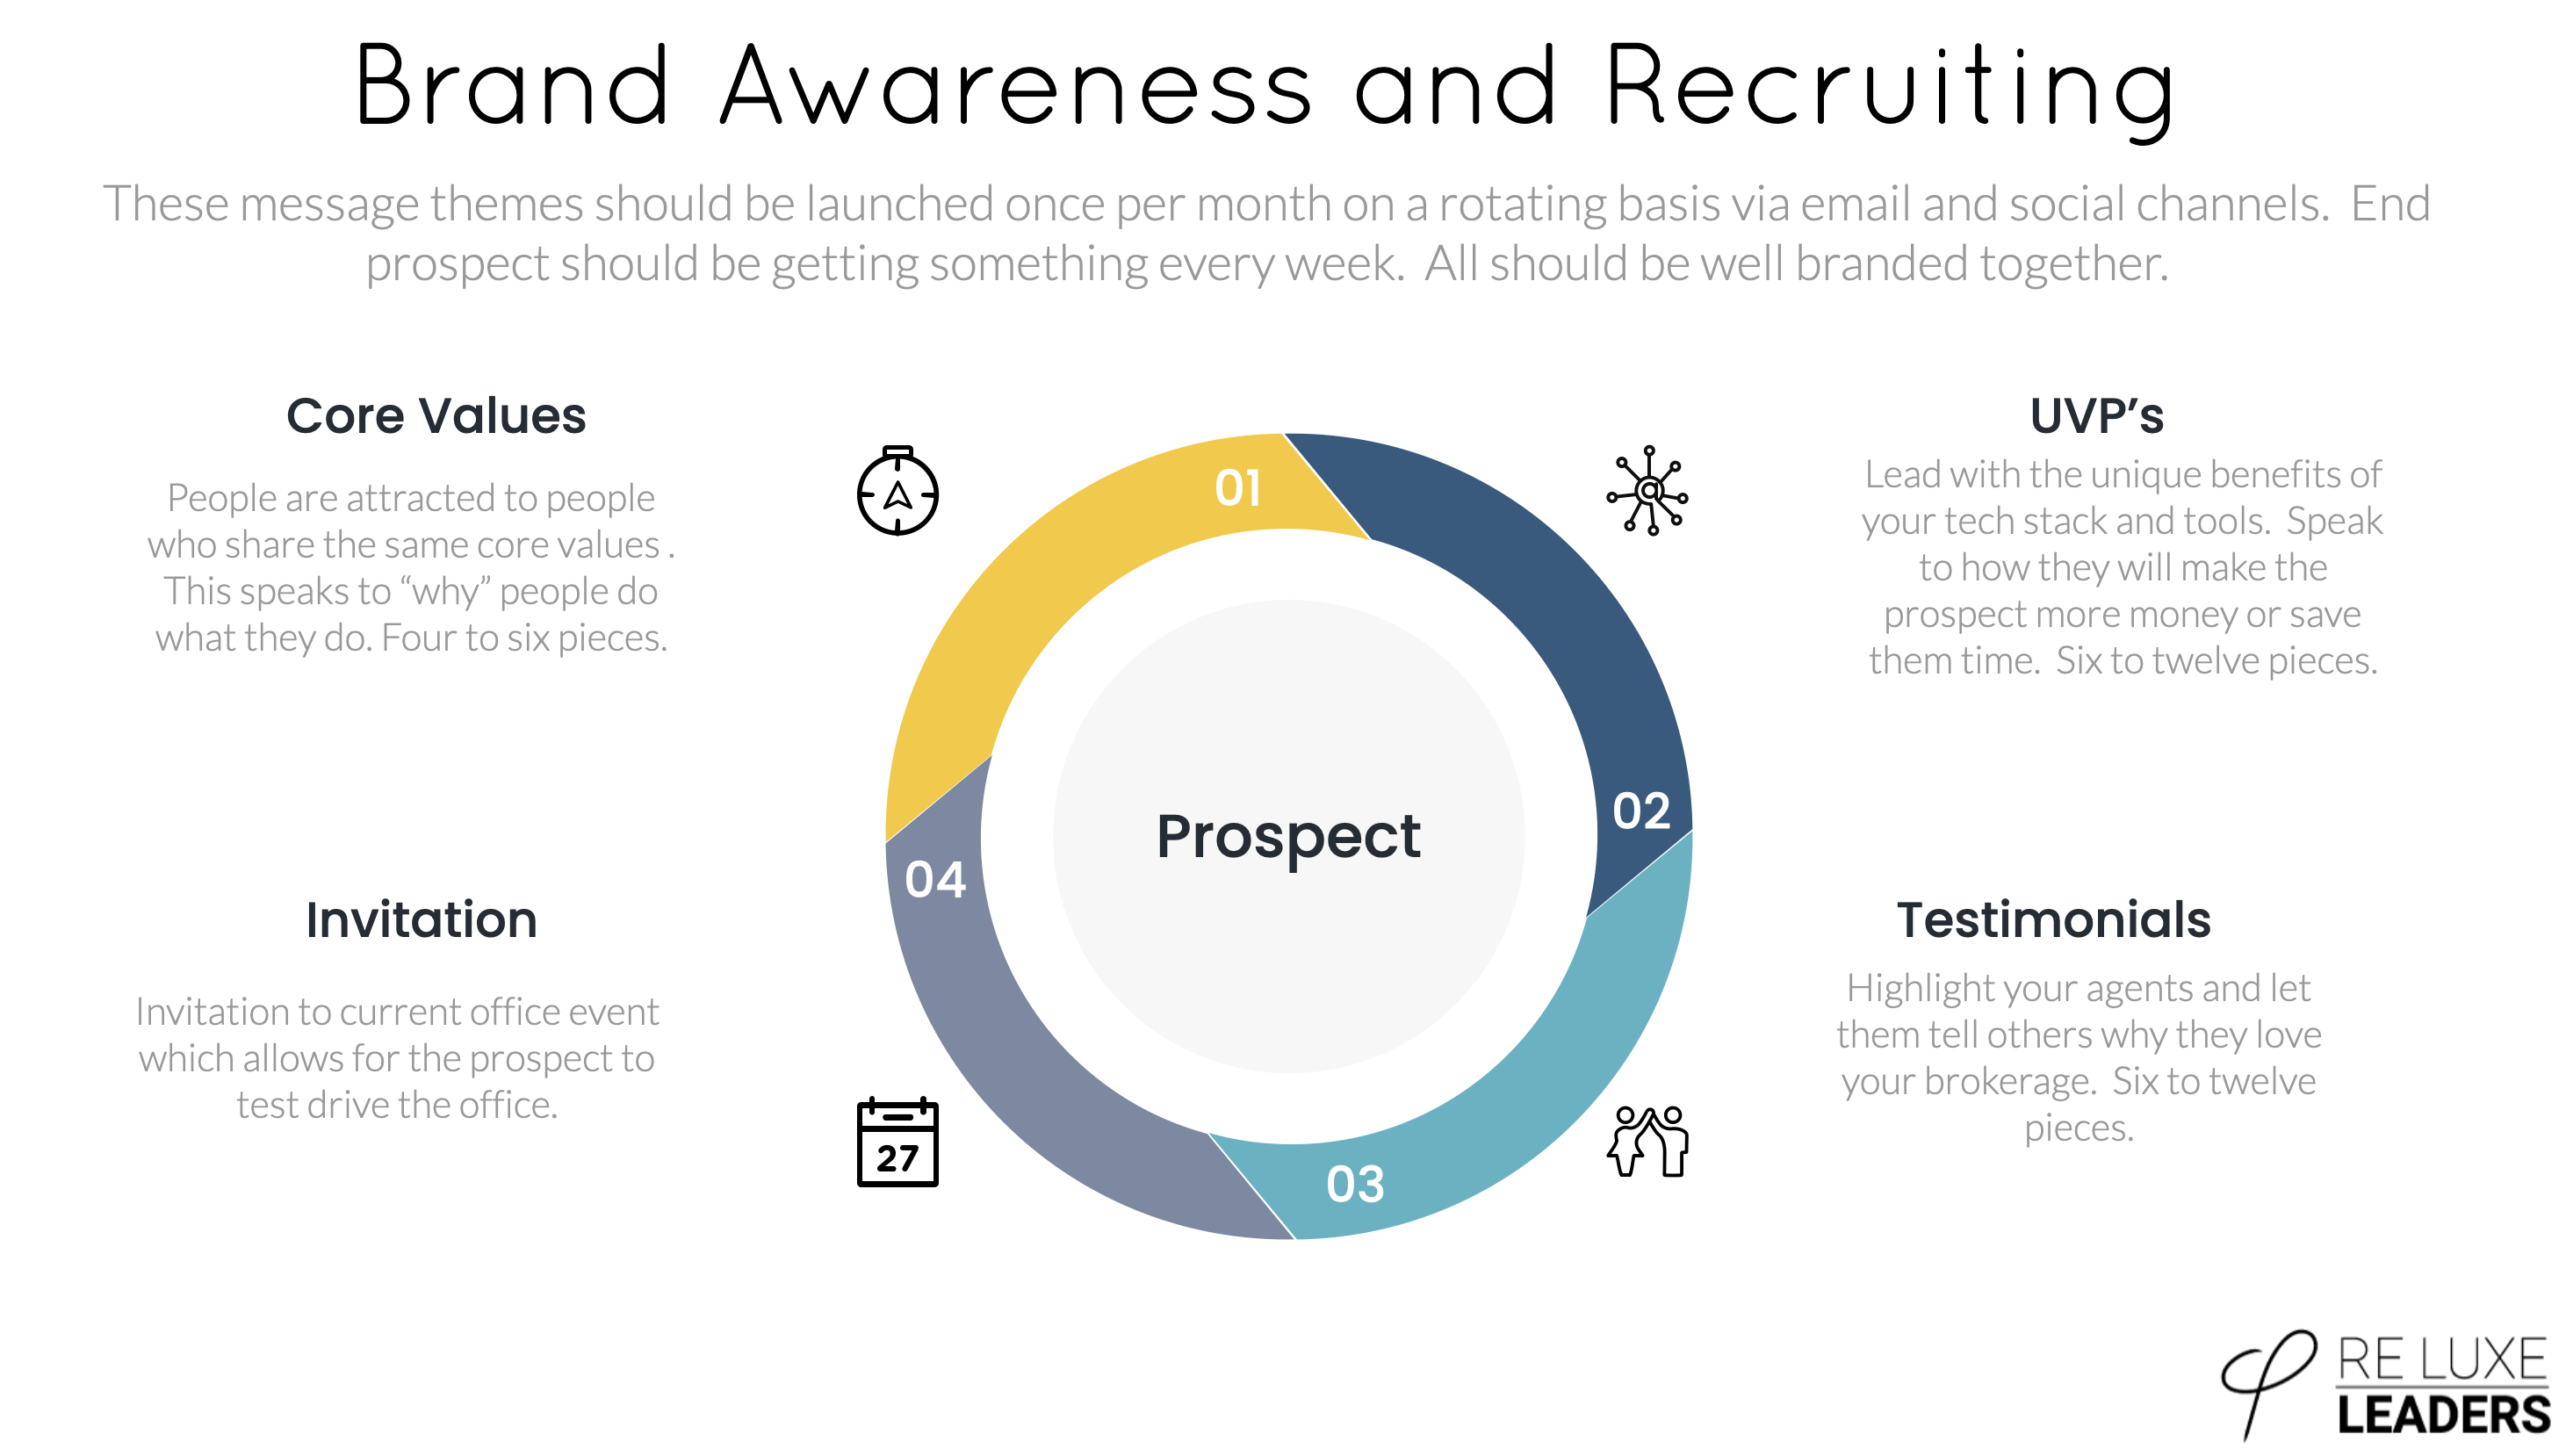 Brand Awareness and Recruiting Plan InfoGraphic screenshot